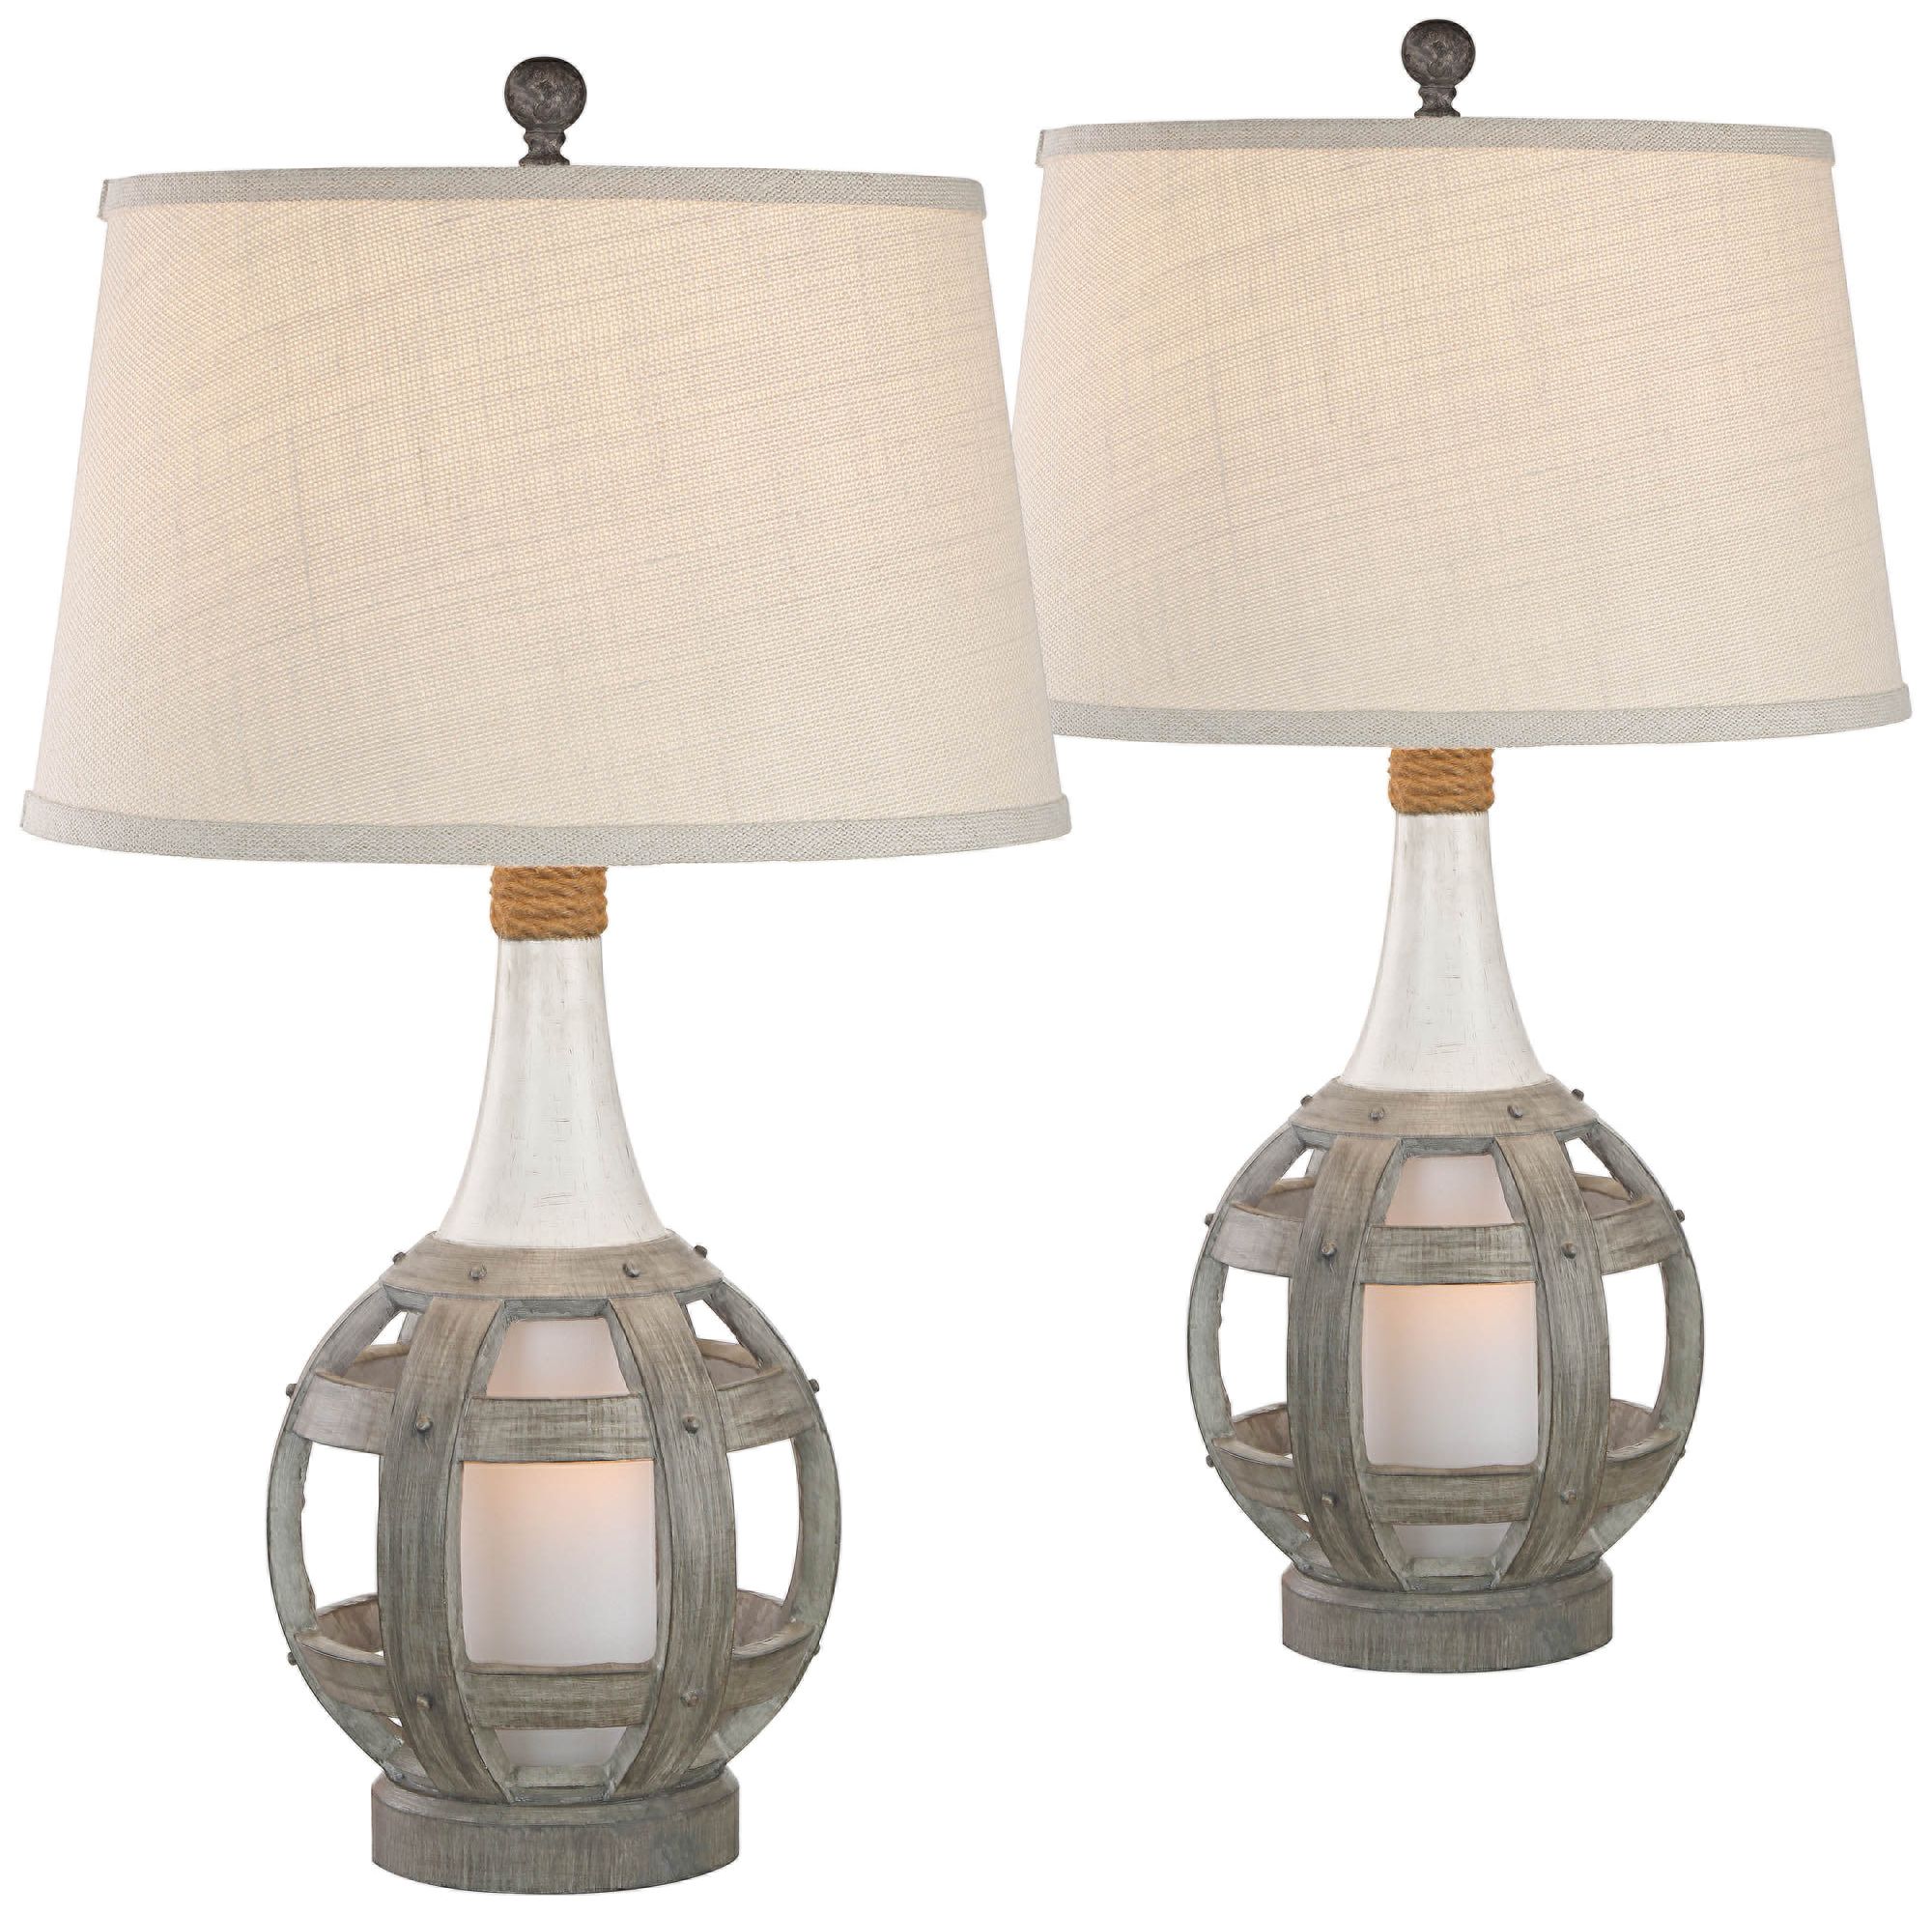 Modern Coastal Night Light Table Lamps Set of 2